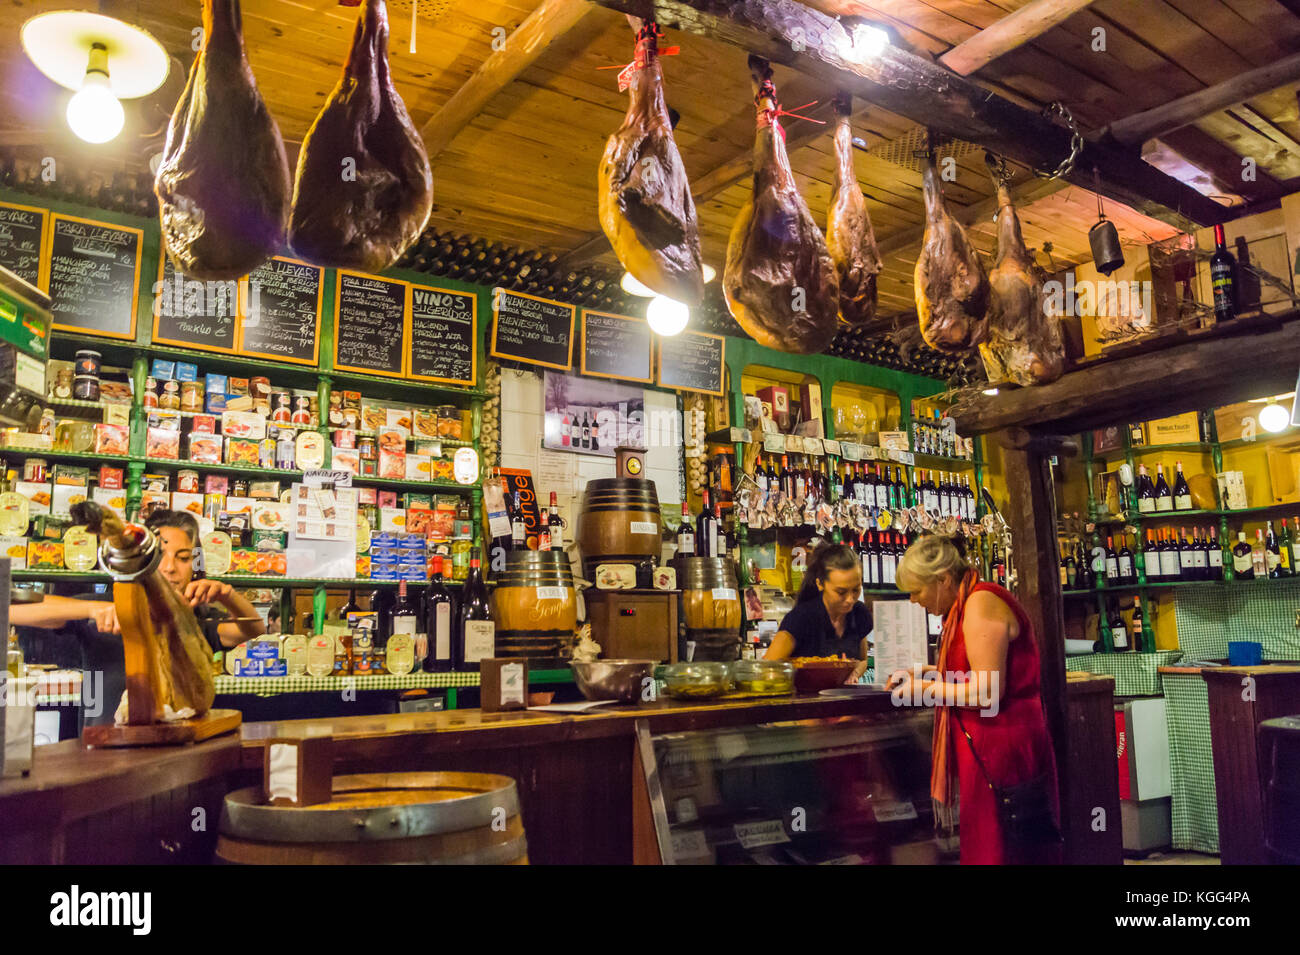 Interior of La Antigua Abaceria tapas bar, Calle Pureza, Triana, Seville, Andalucia, Spain Stock Photo